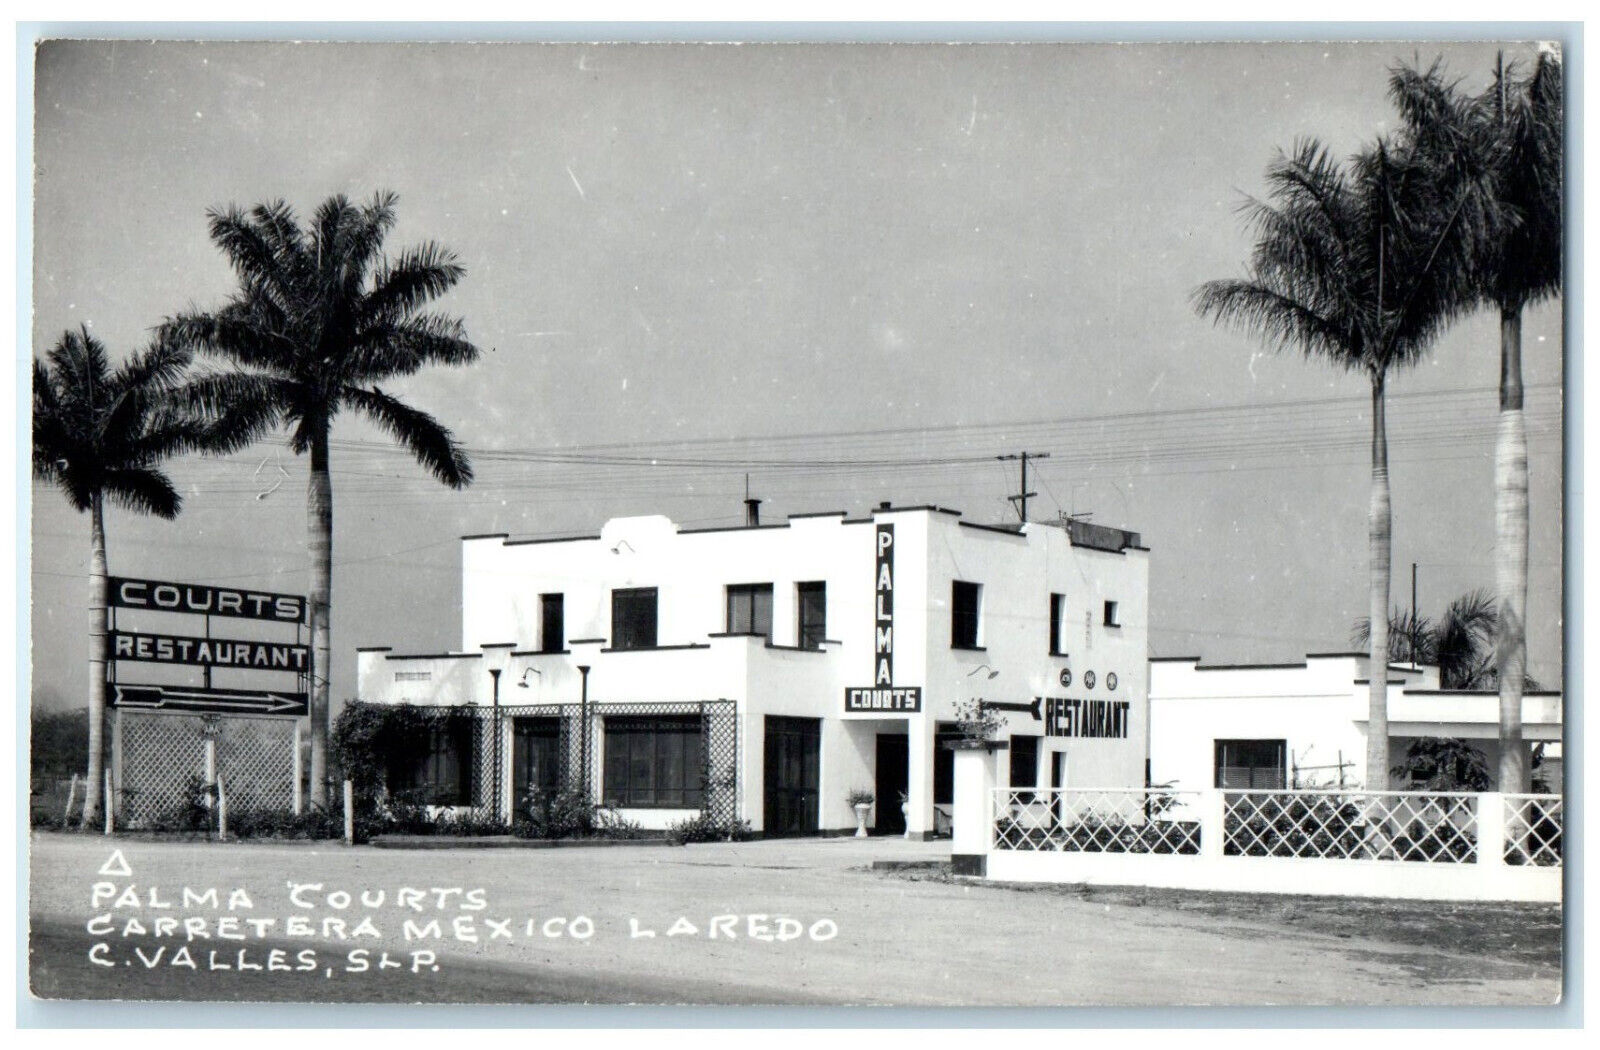 c1930's Palma Courts Restaurant View C. Valles Mexico Laredo RPPC Photo Postcard